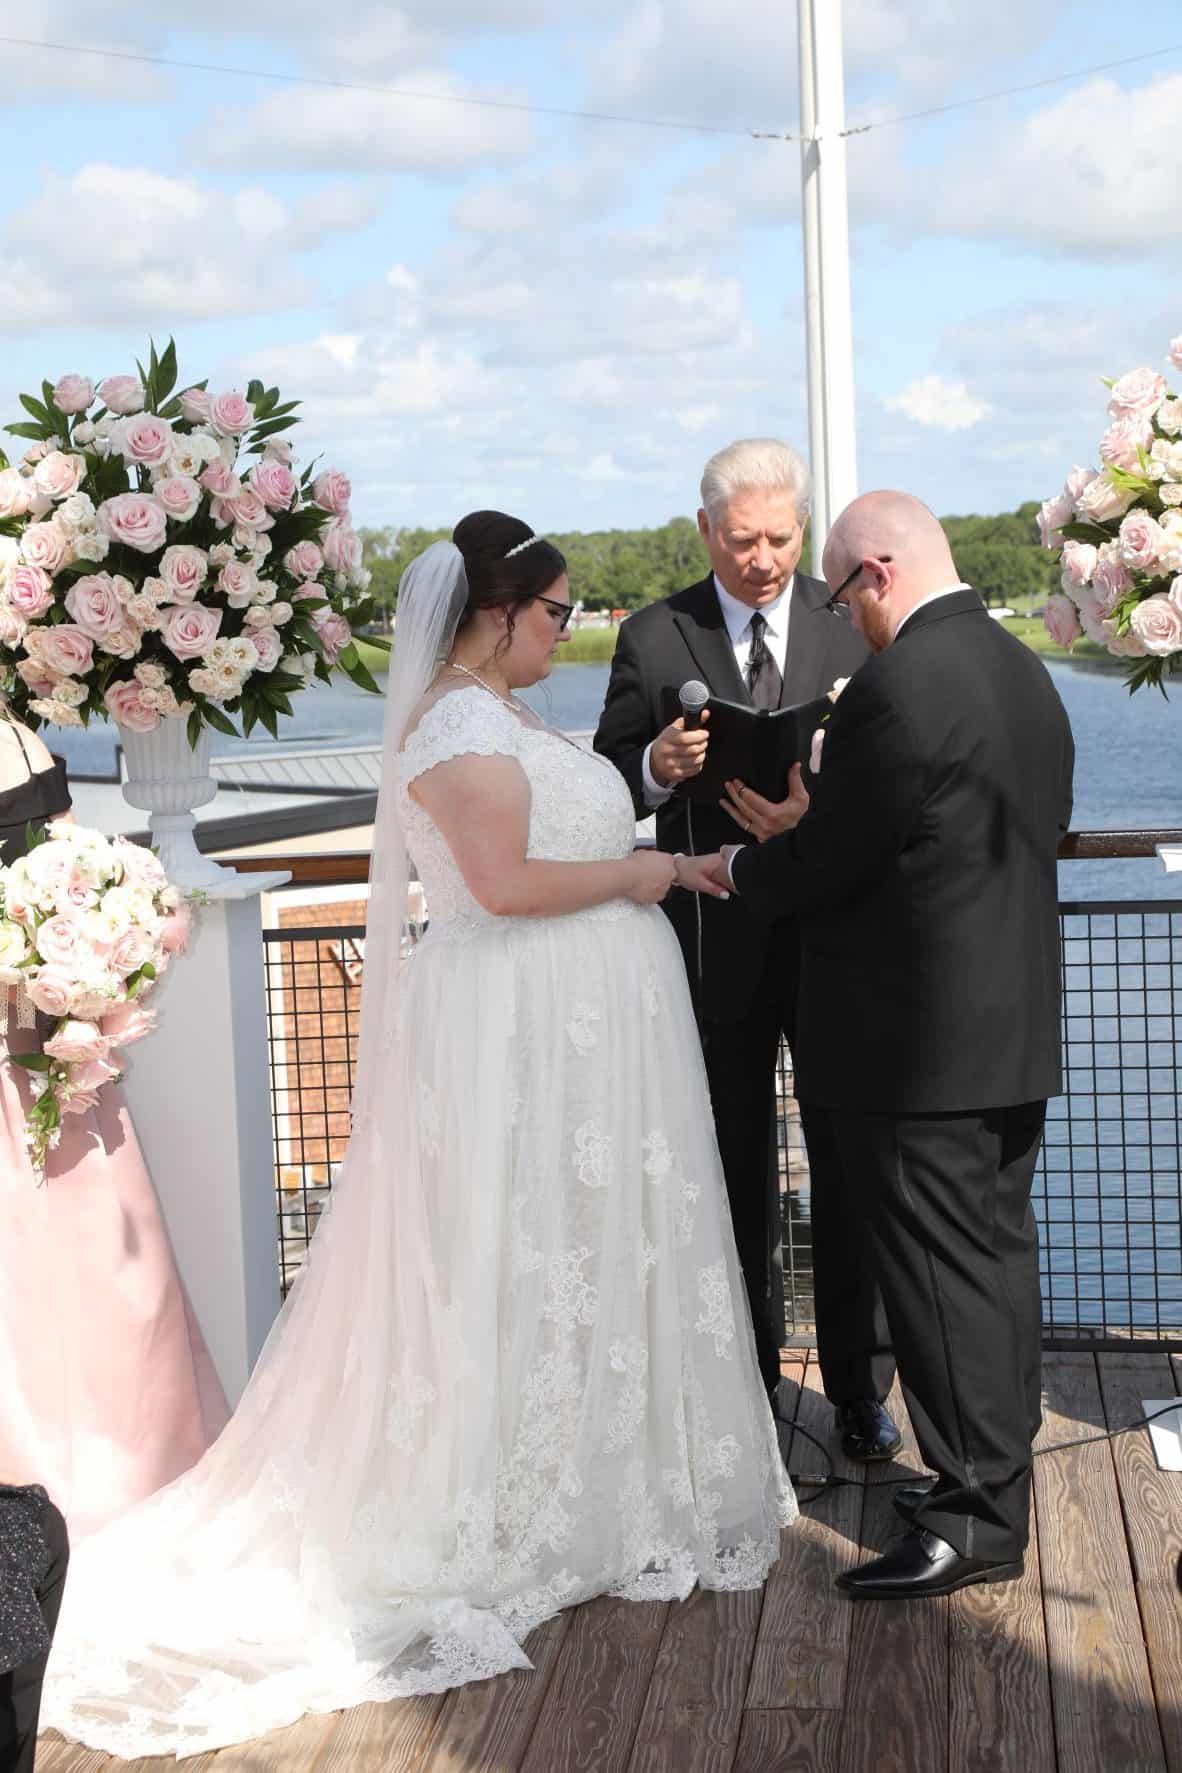 Outdoor Ceremony - Just Marry Weddings - Chapman Photography - Ceremony